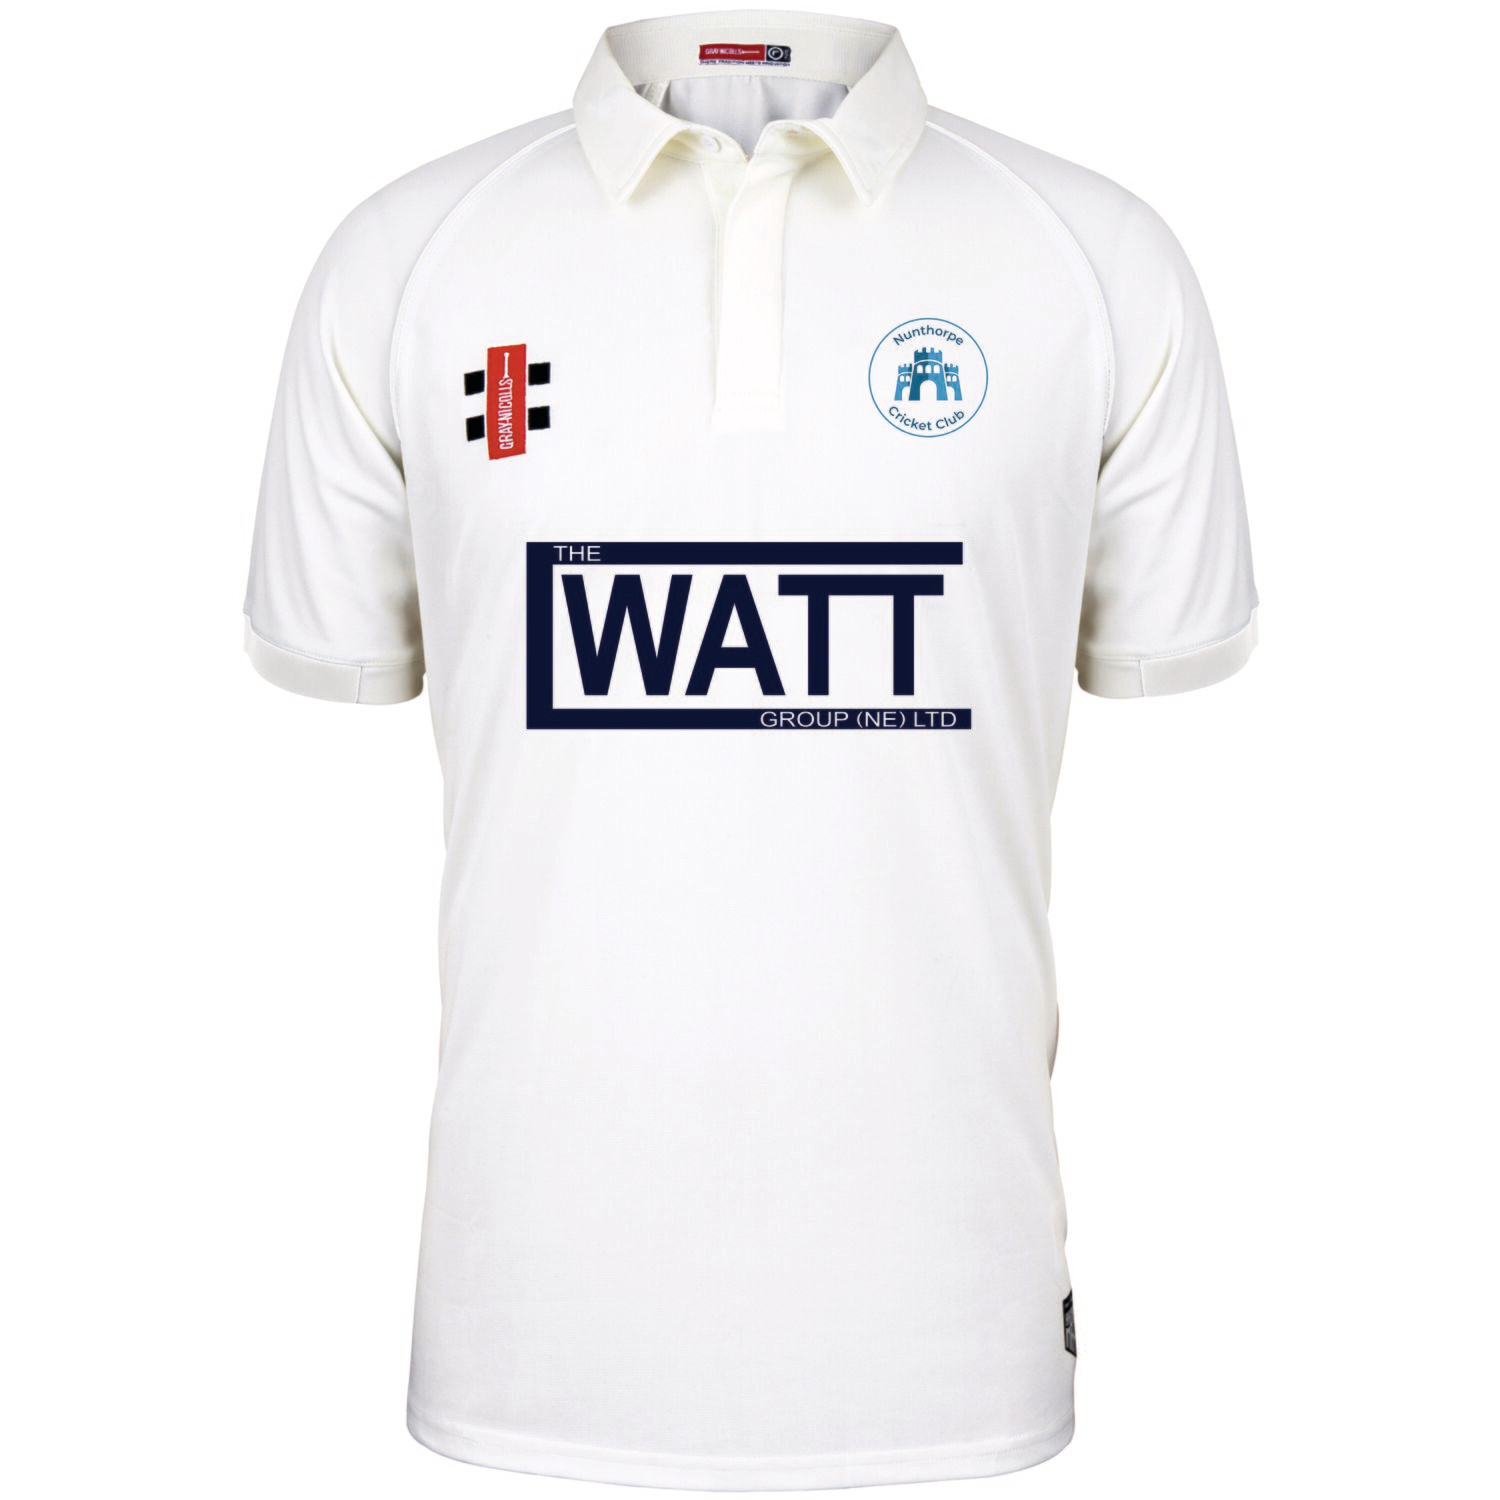 Nunthorpe Matrix V2 Short Sleeve Cricket Shirt